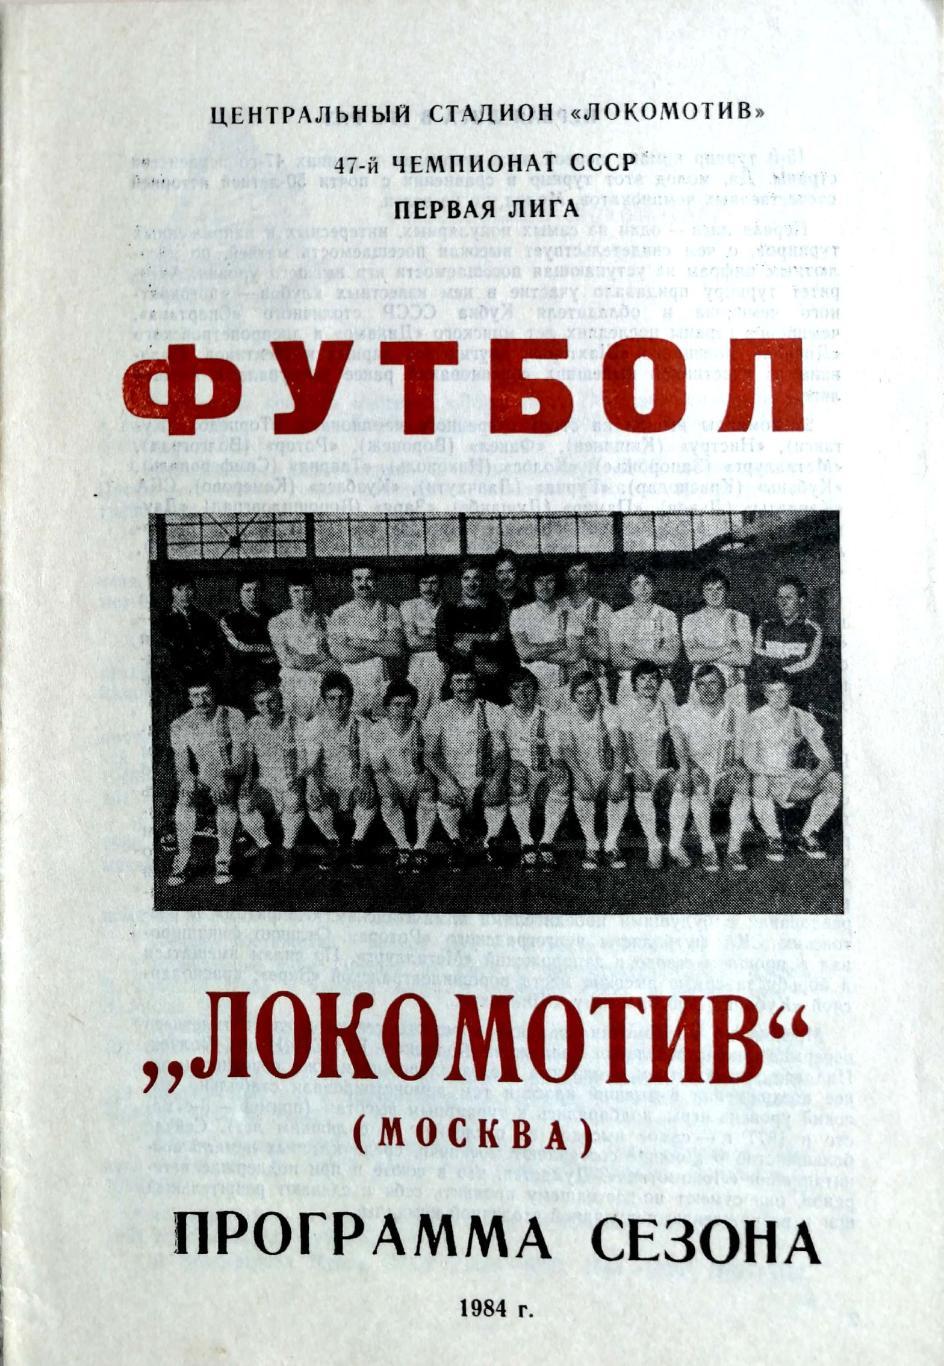 Календарь-справочник. Программа-сезона Локомотив Москва 1984